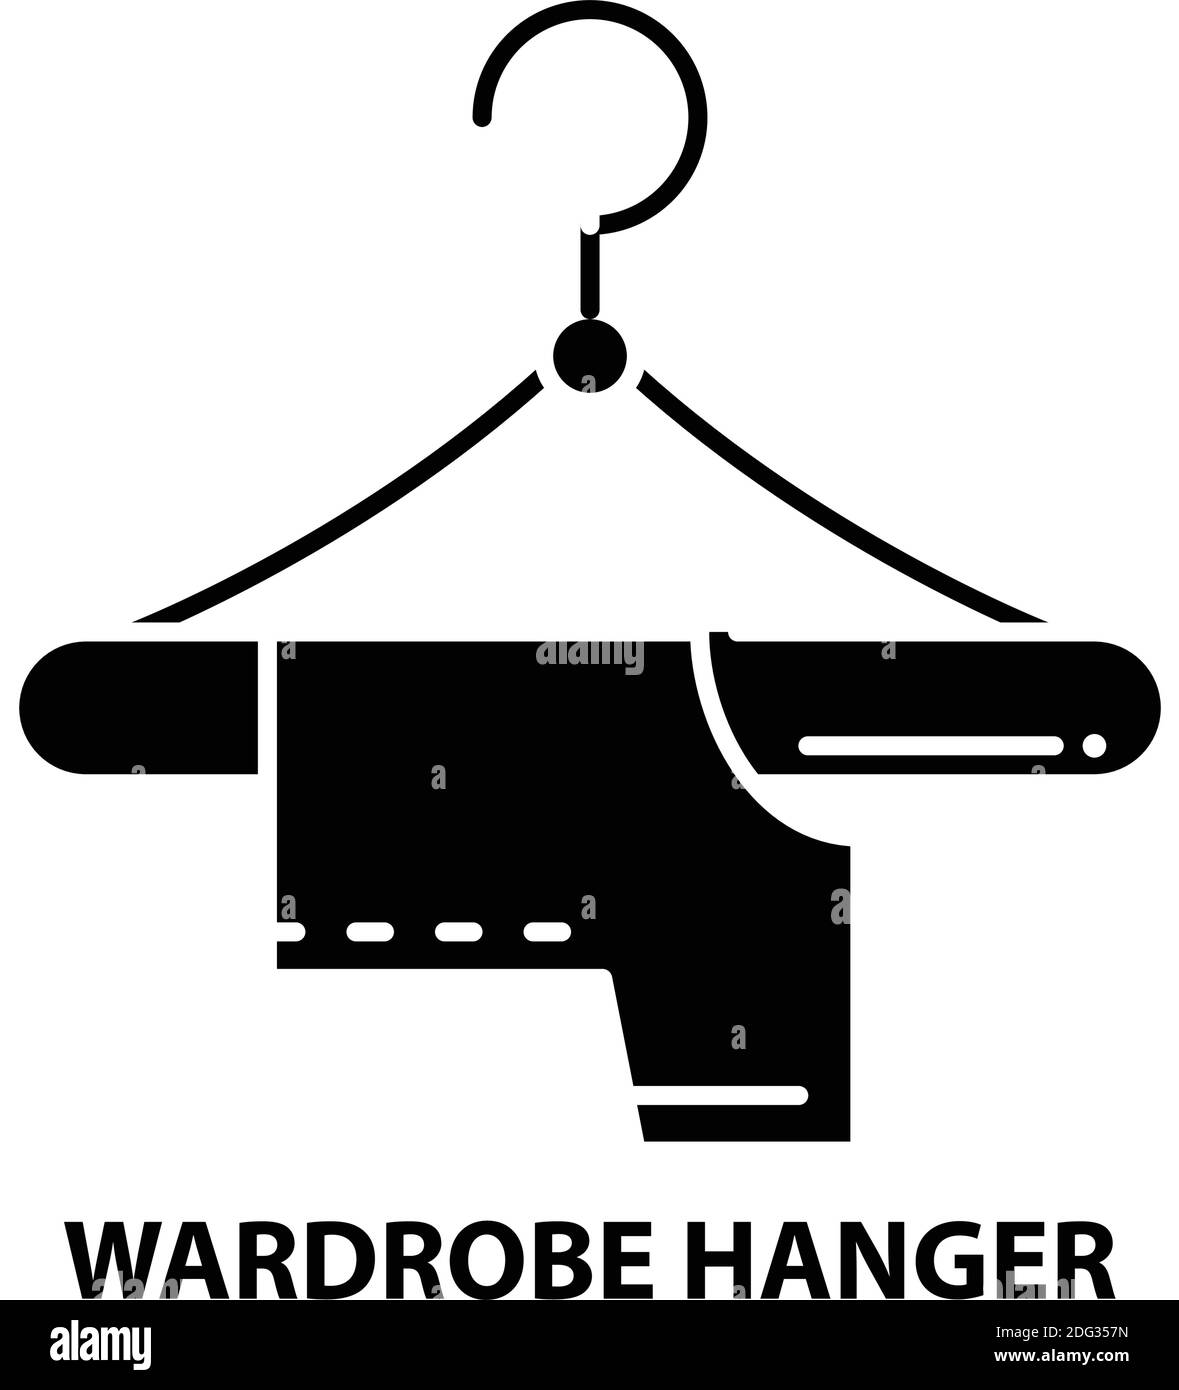 wardrobe hanger icon, black vector sign with editable strokes, concept illustration Stock Vector